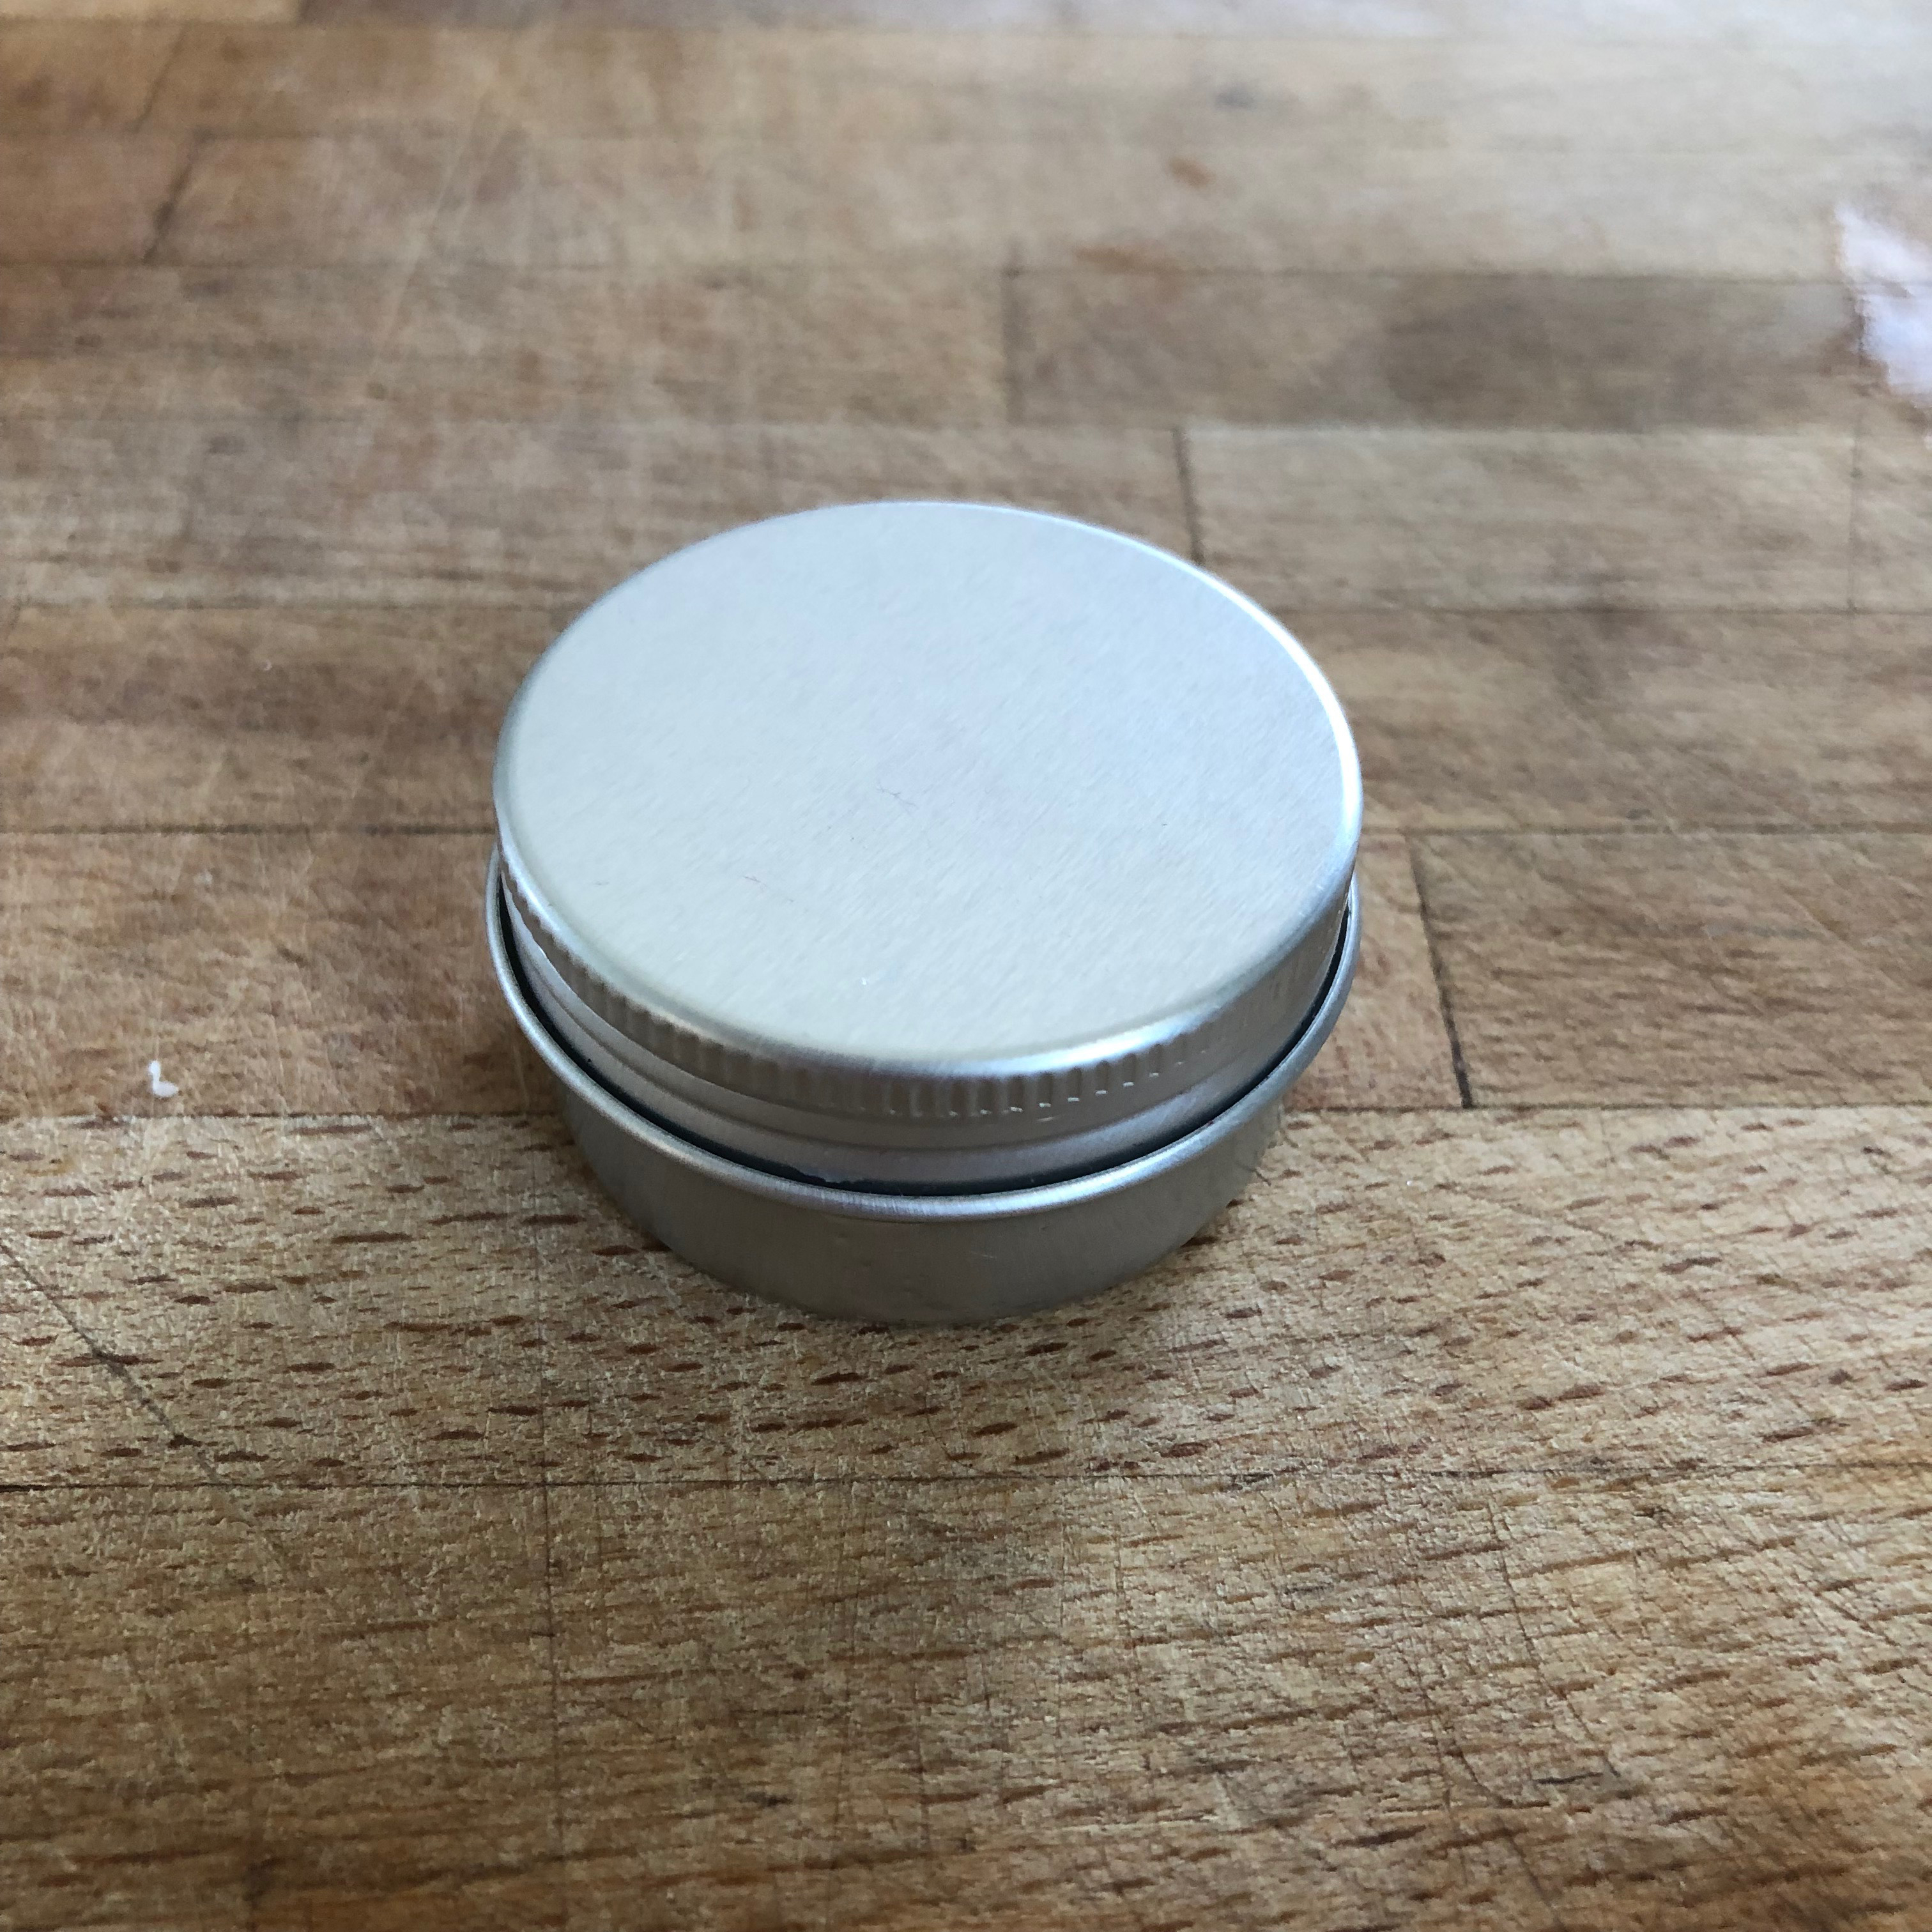 How to make lip balm – Step 6